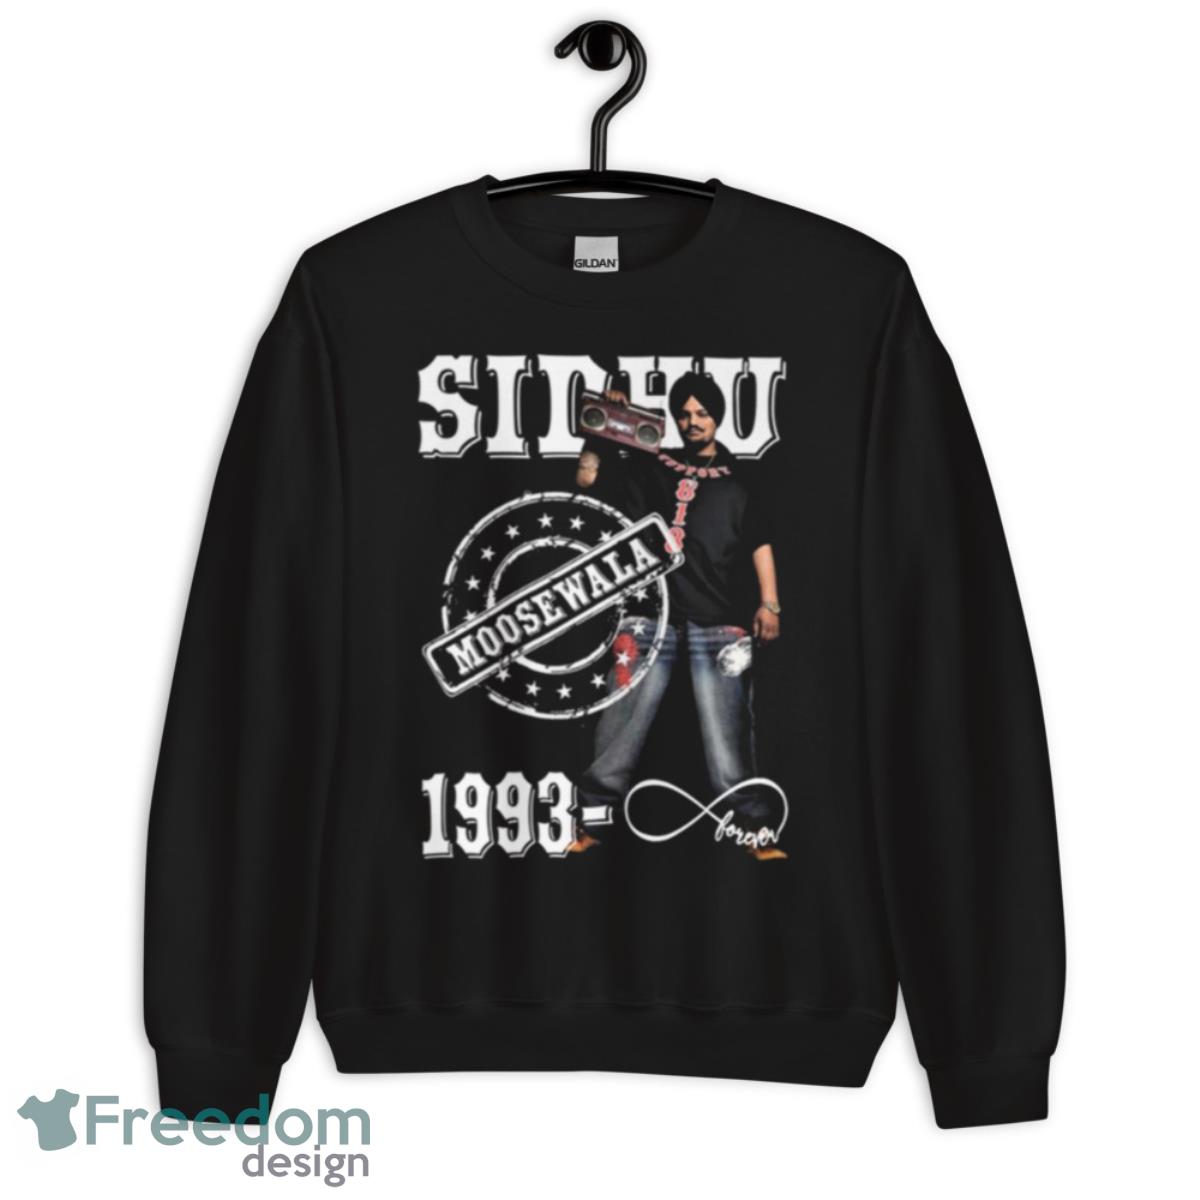 Sidhu Moose Wala 1993 Legend shirt